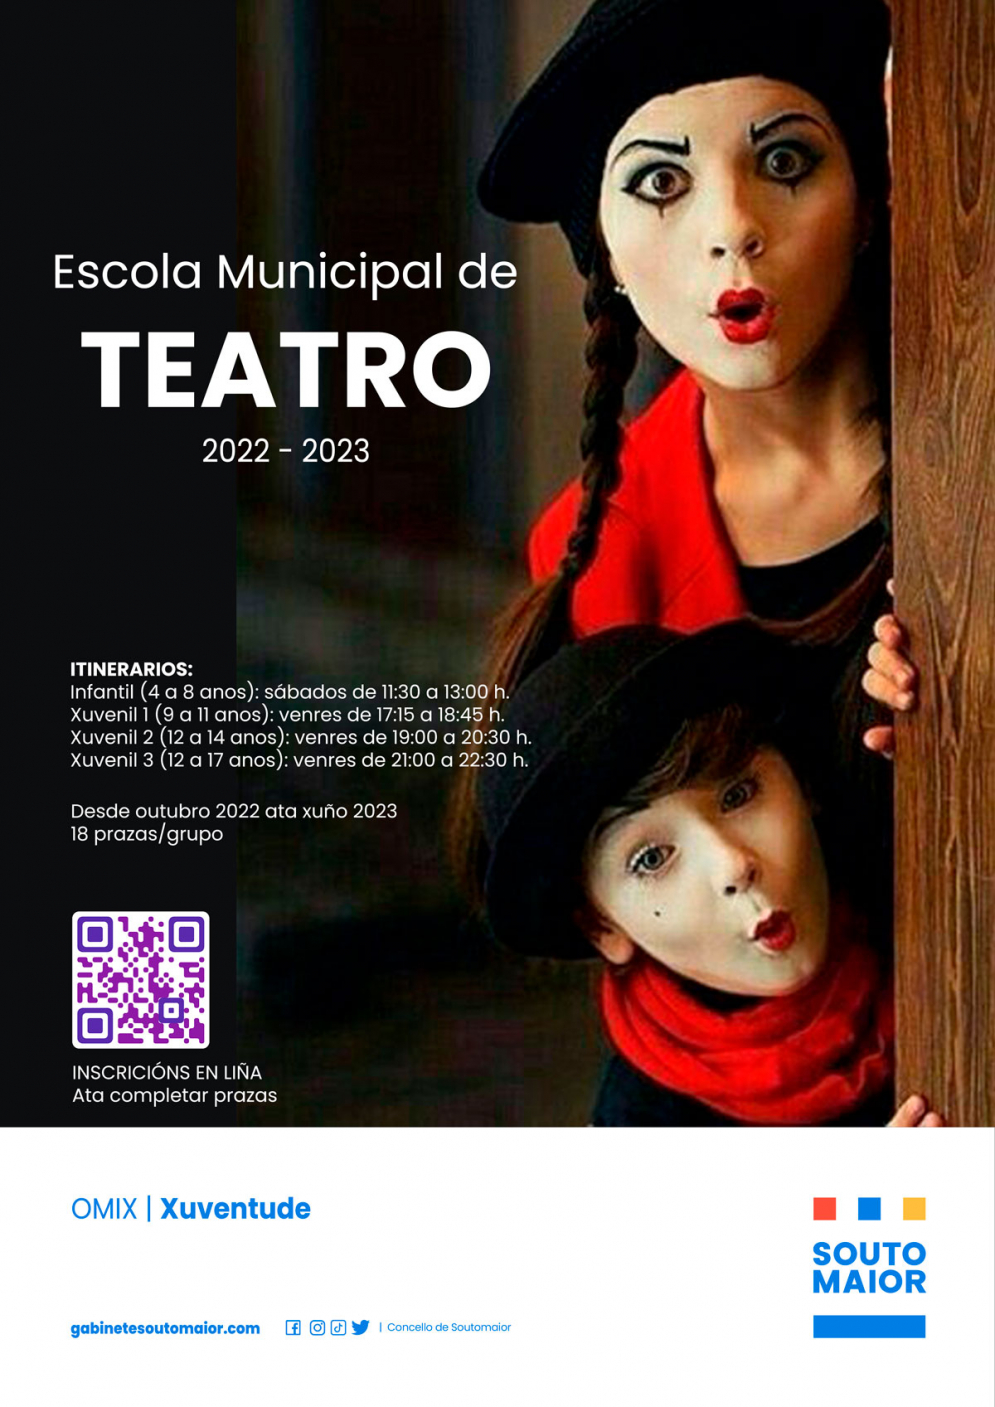 Escola Municipal de Teatro 2022-2023